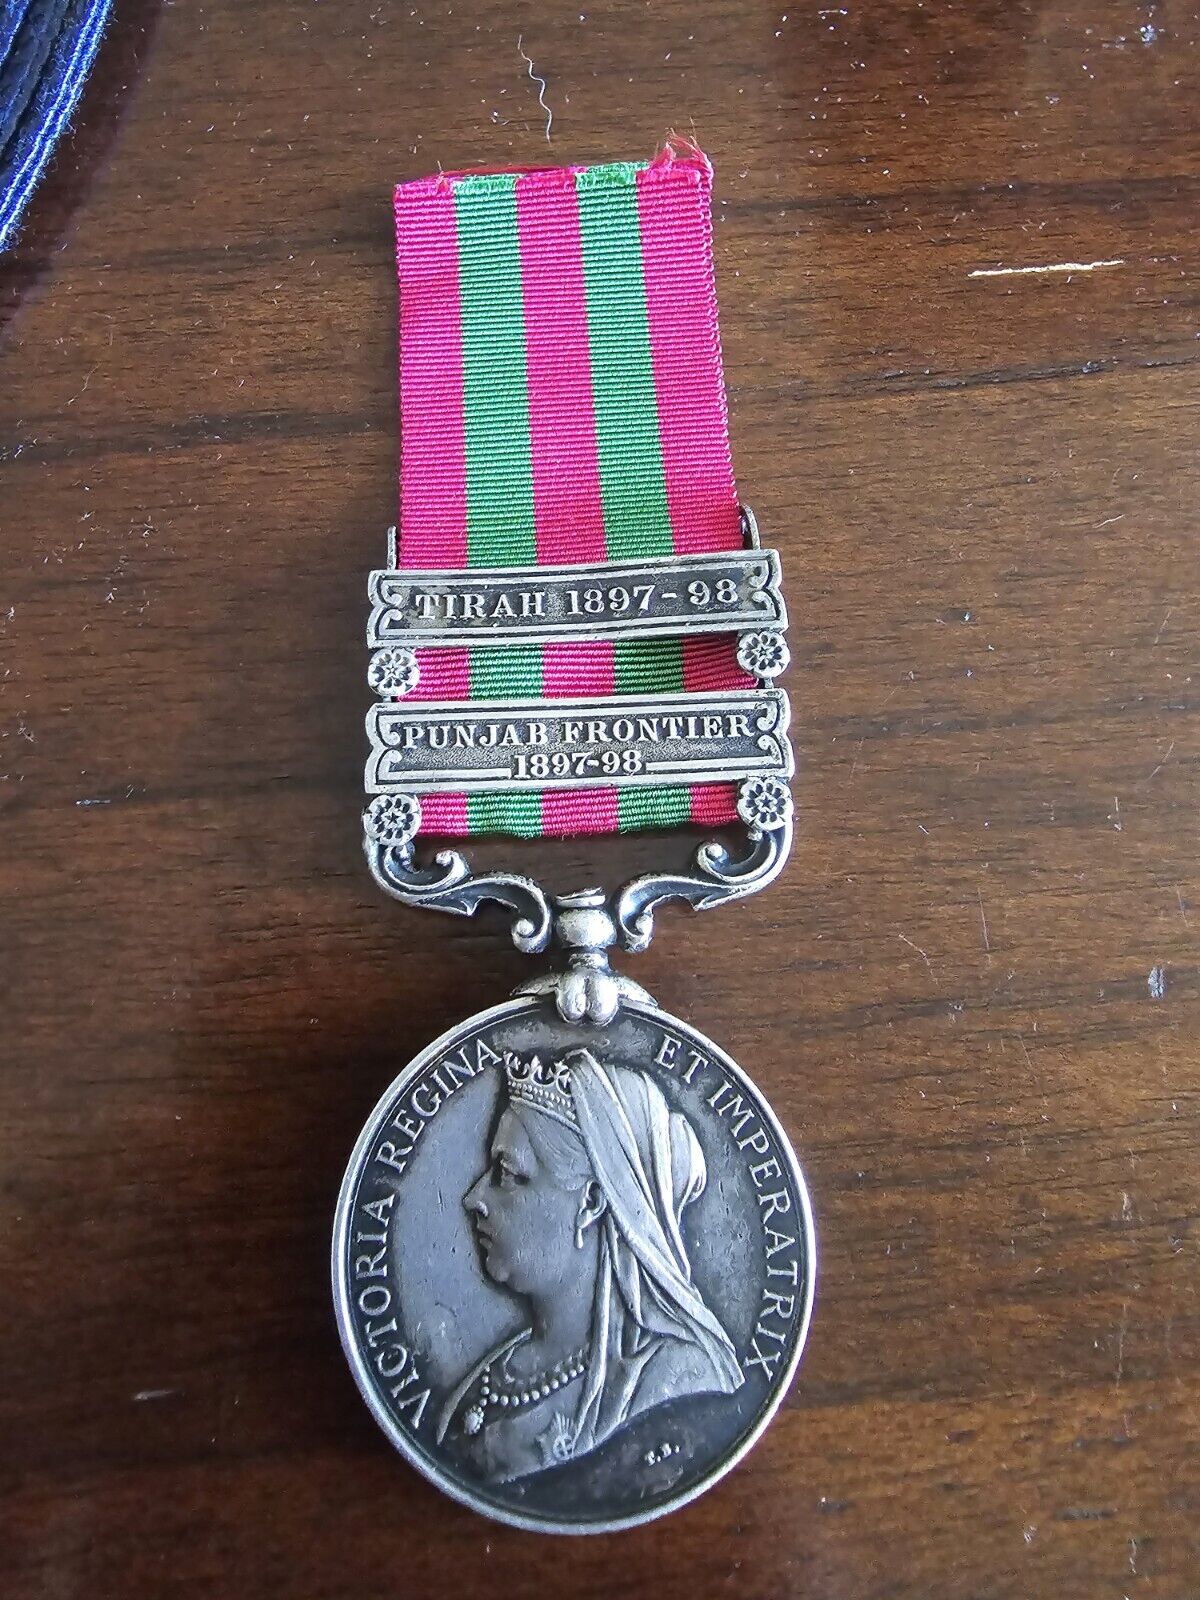 Original Medal: IGS 1895 Punjab Frontier 1897-98, Tirah, 2nd battalion Royal Fus